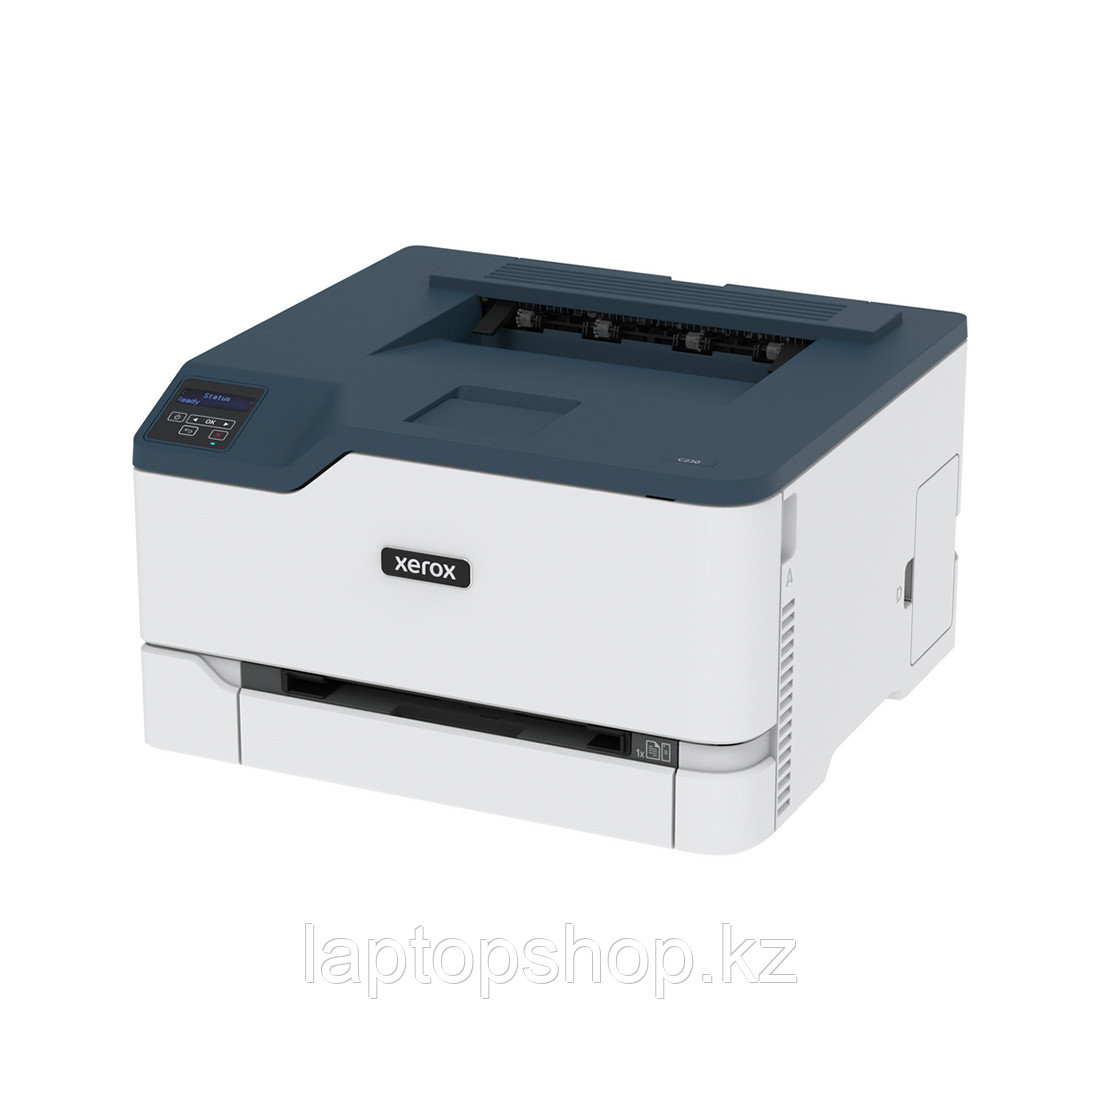 Цветной принтер Xerox C230DNI, фото 1